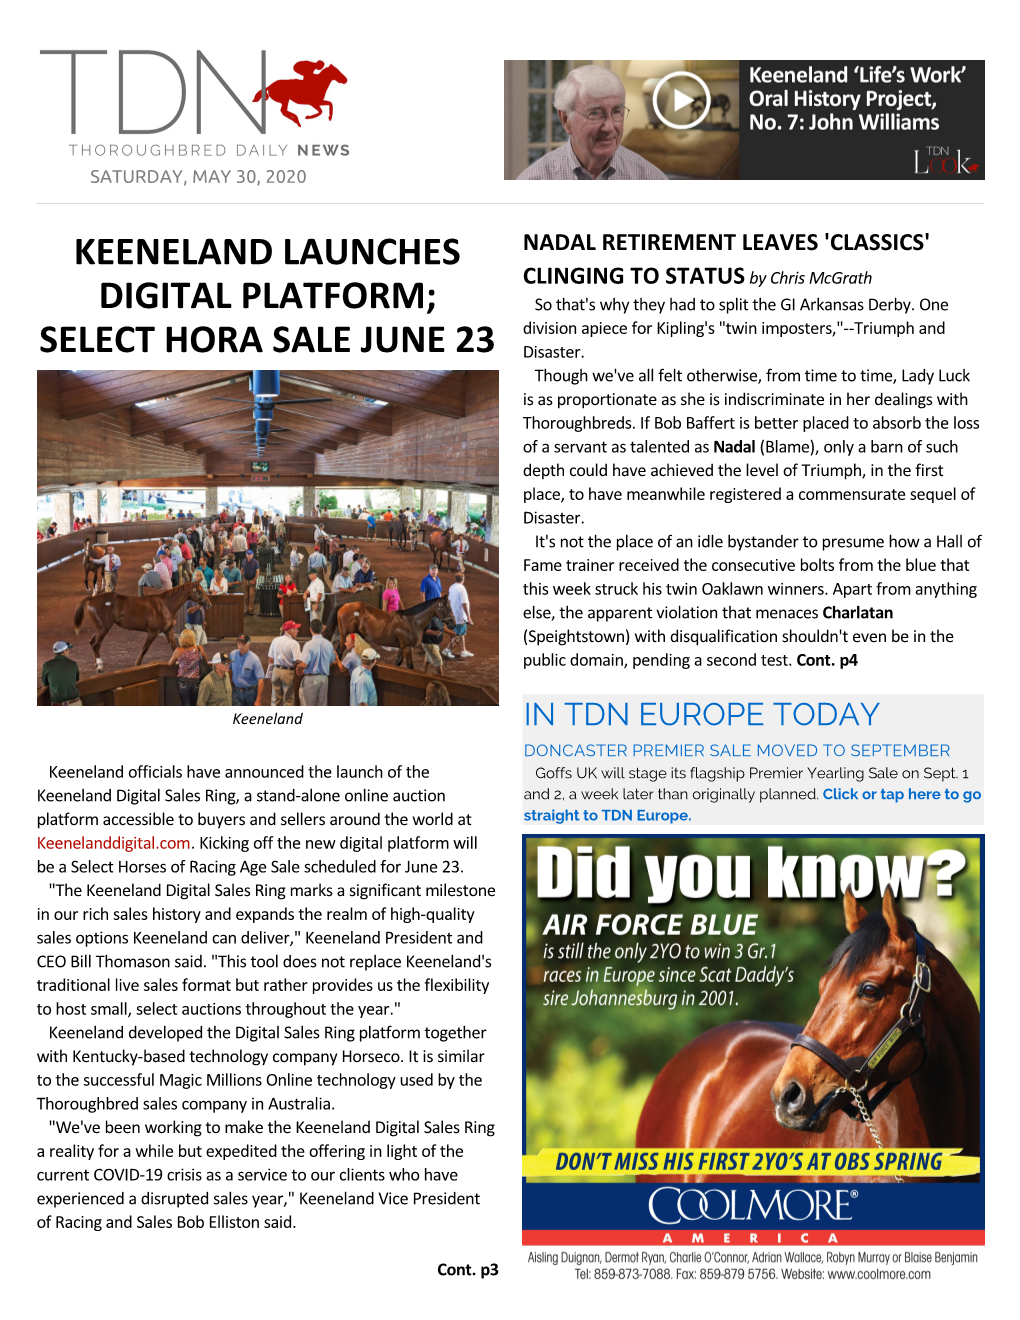 Keeneland Launches Digital Platform